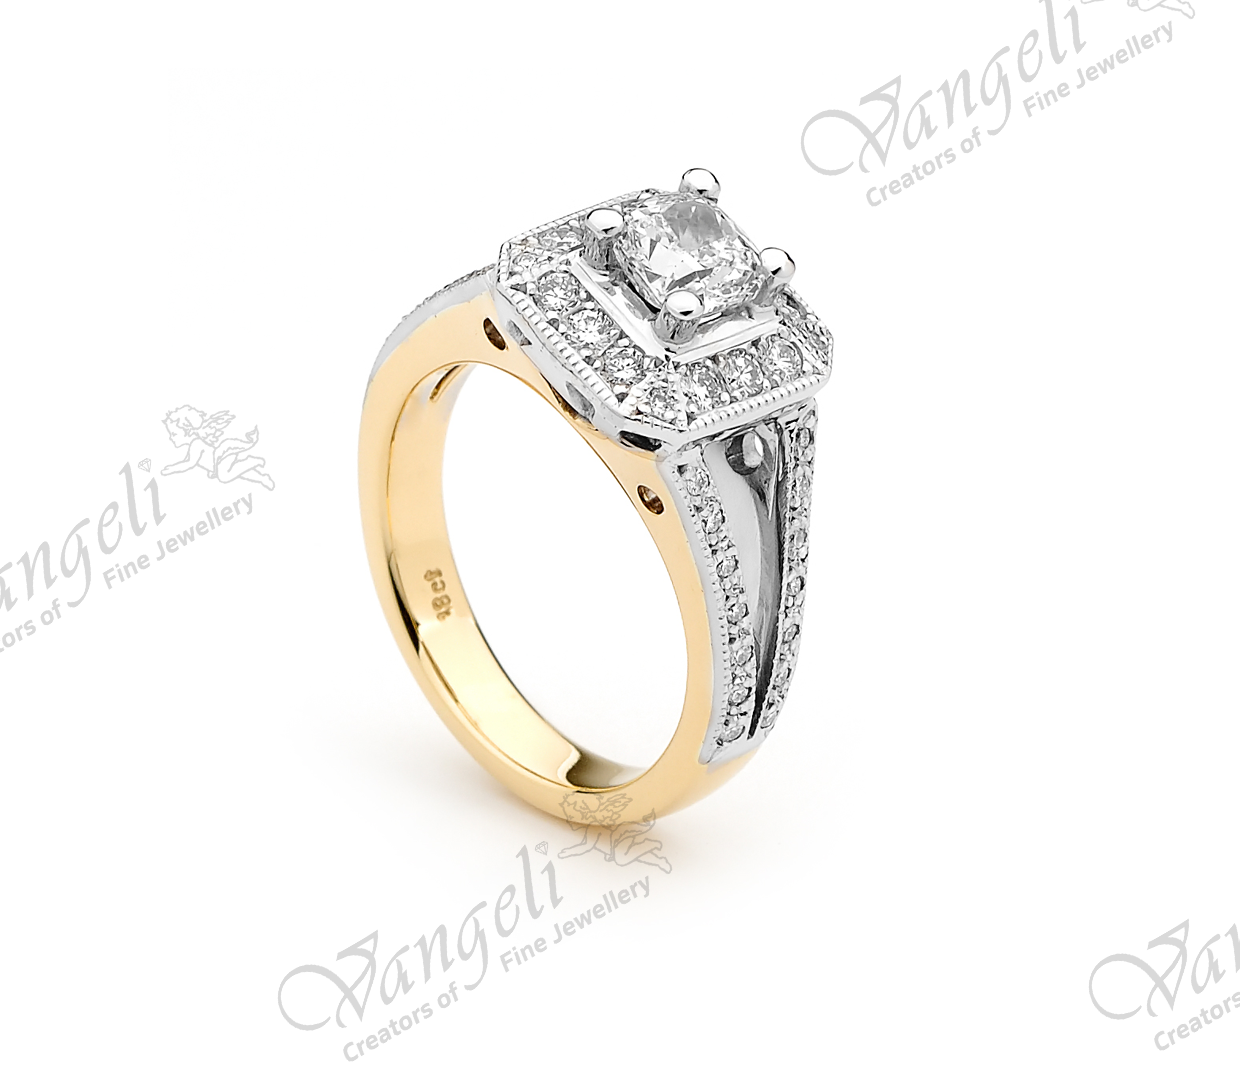 18ct white and yellow gold custom designed hand-made diamond ring